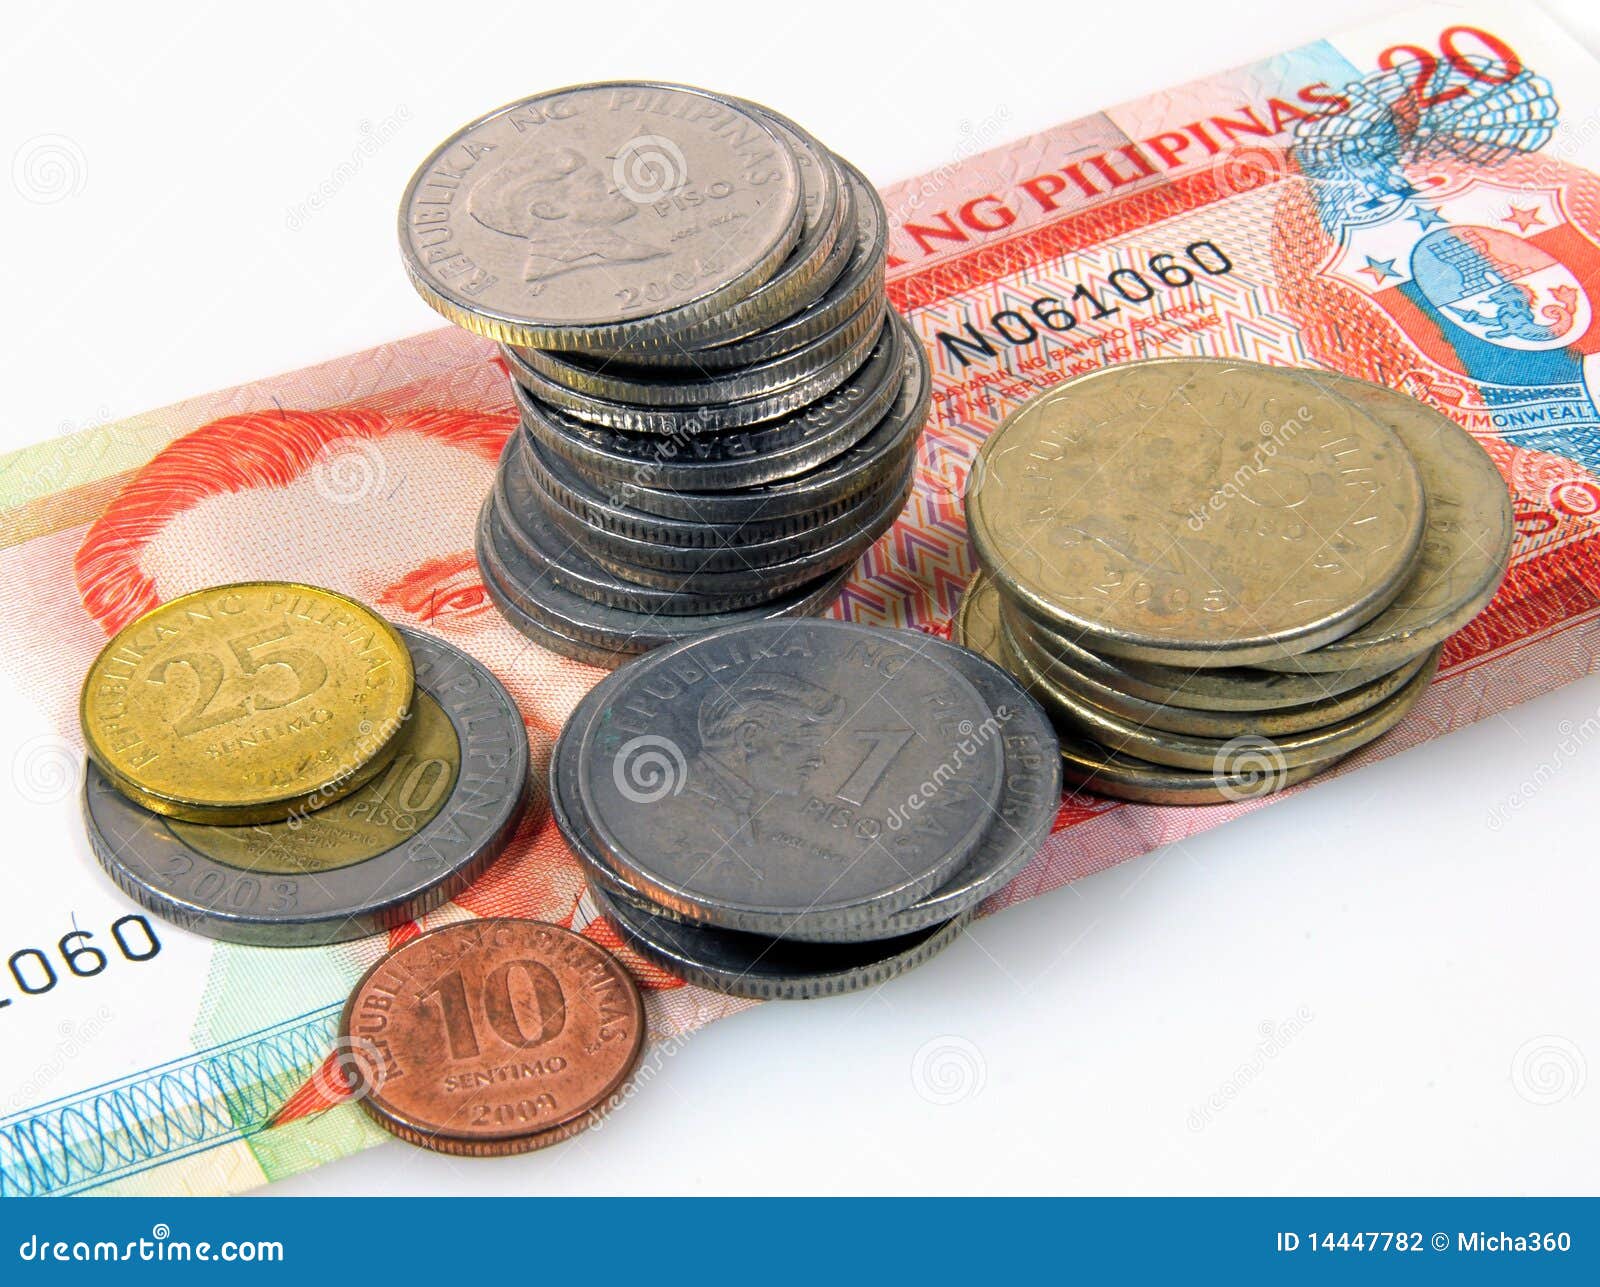 philippine money clipart - photo #10